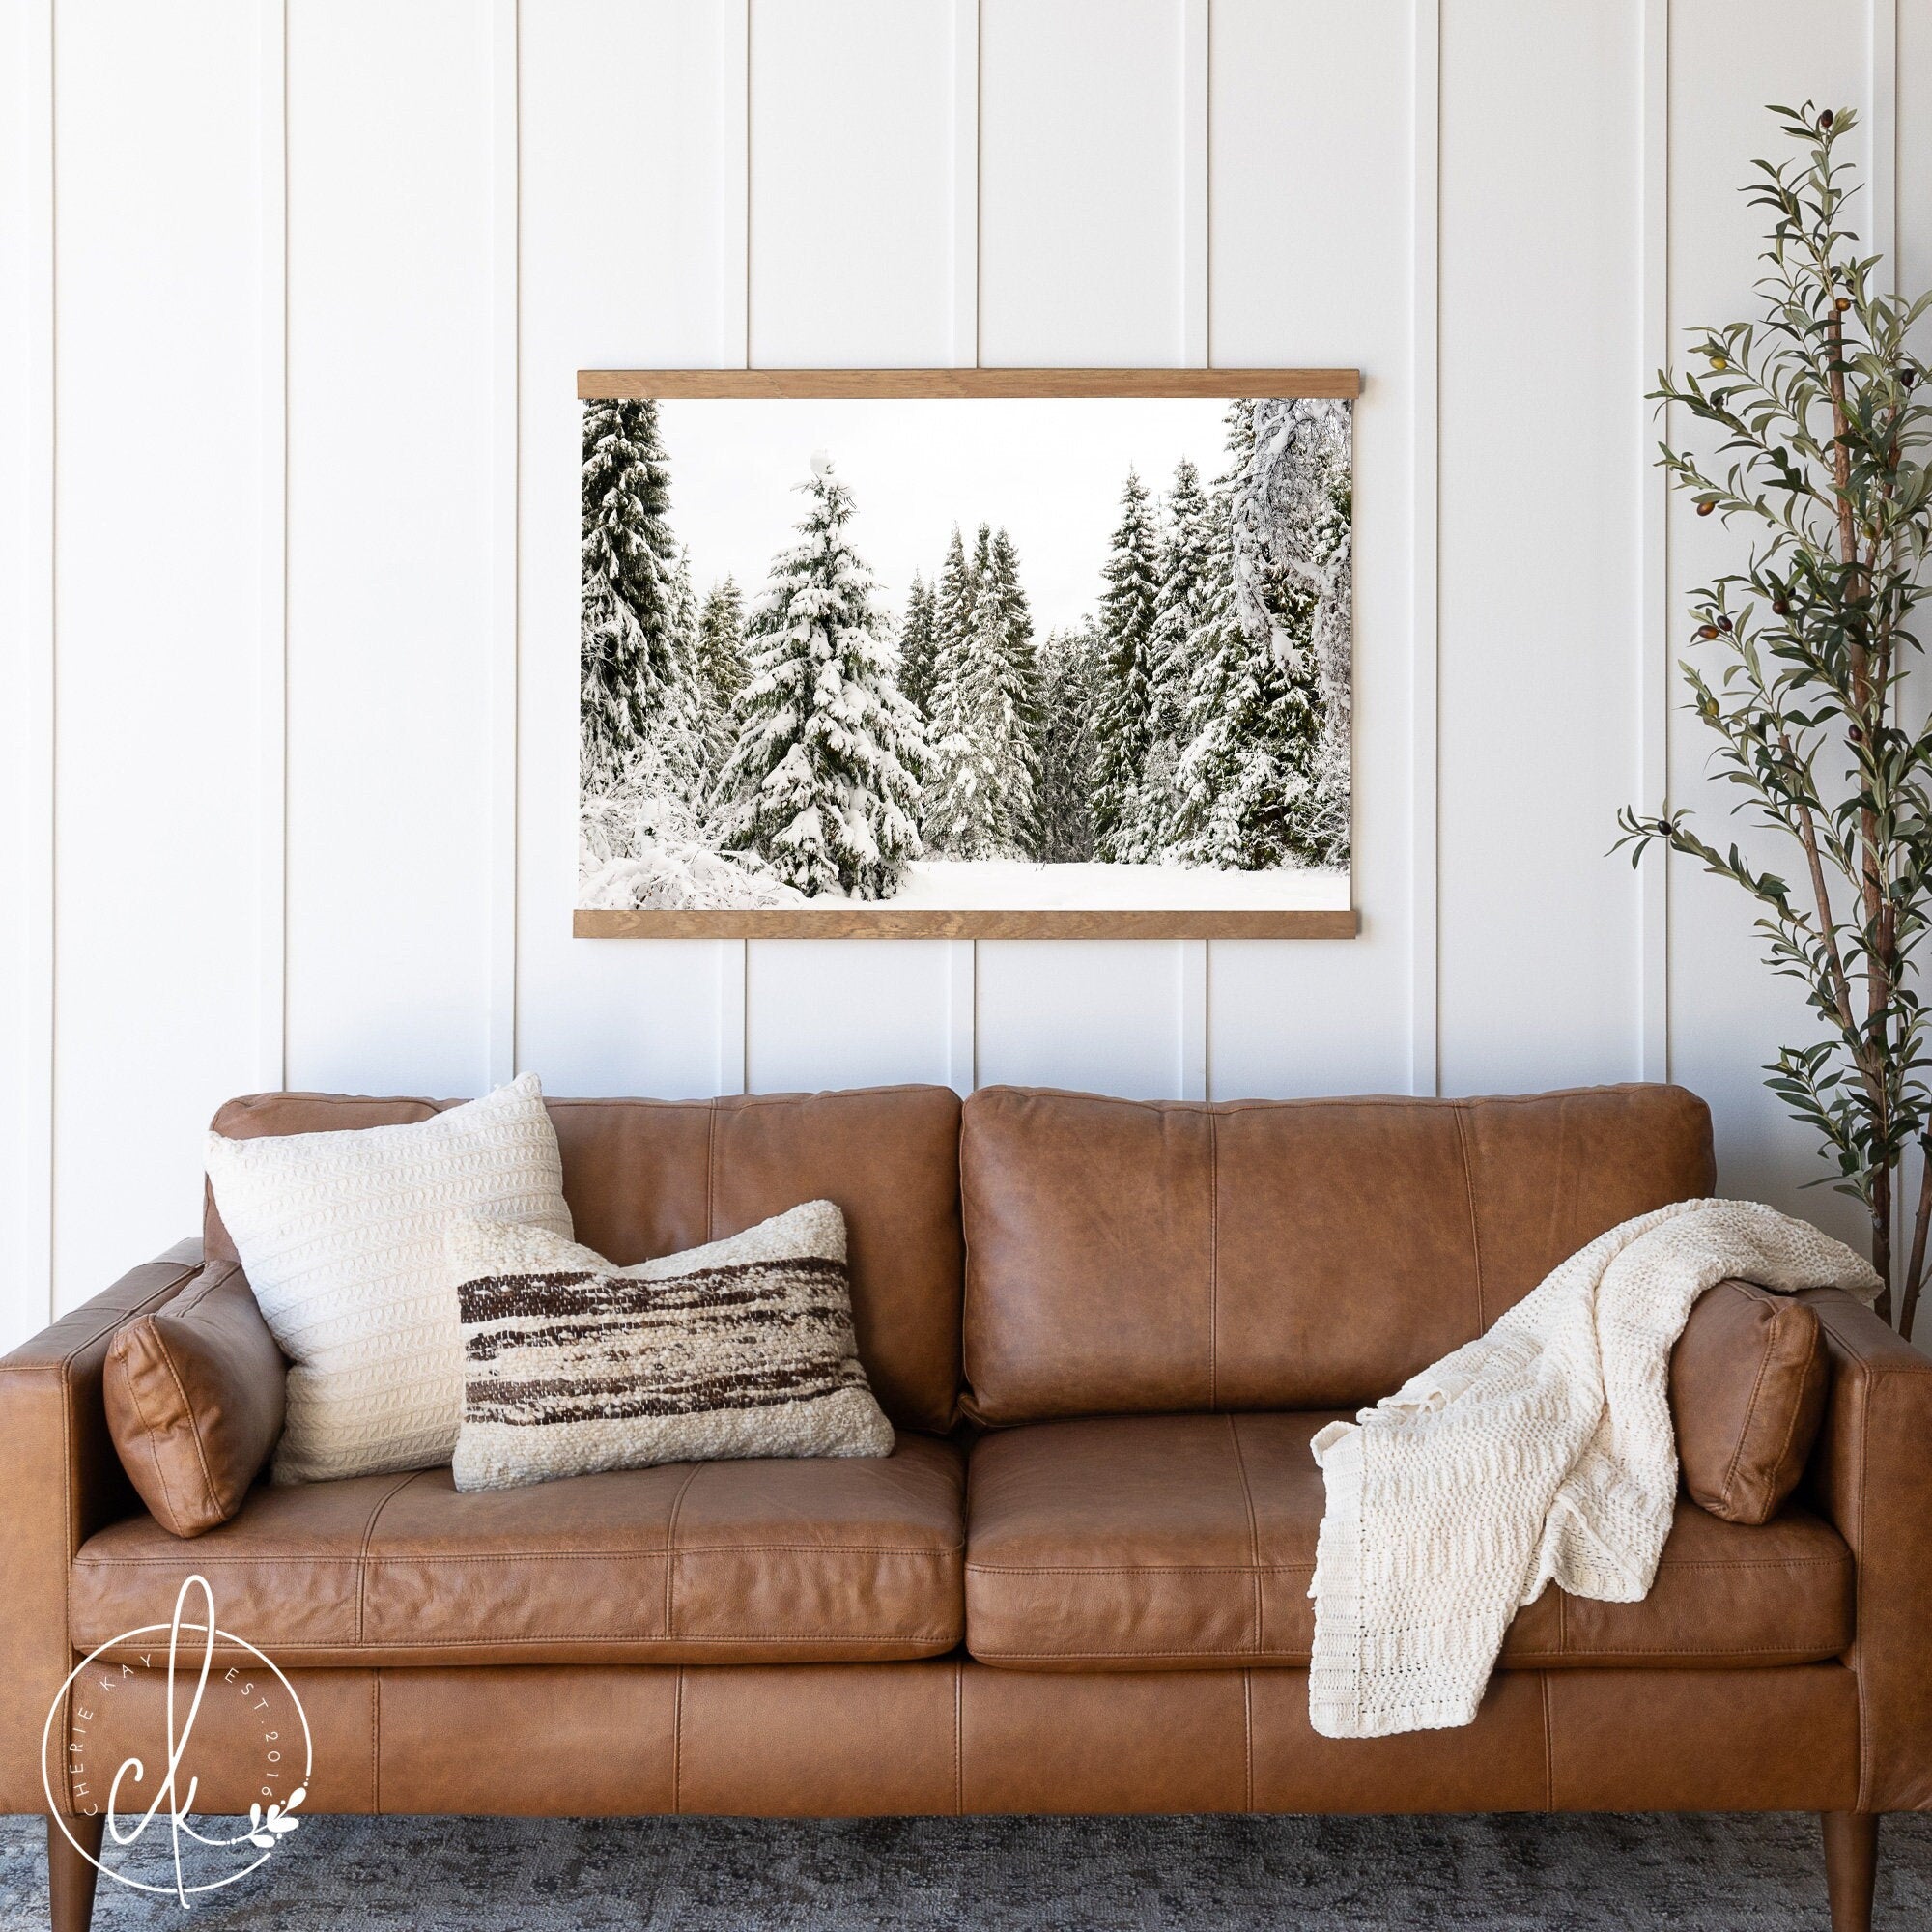 Winter Pines Tapestry Art | Landscape Wall Art | Winter Landscape | Entryway Wall Decor | Snowy Pines Wall Hanging